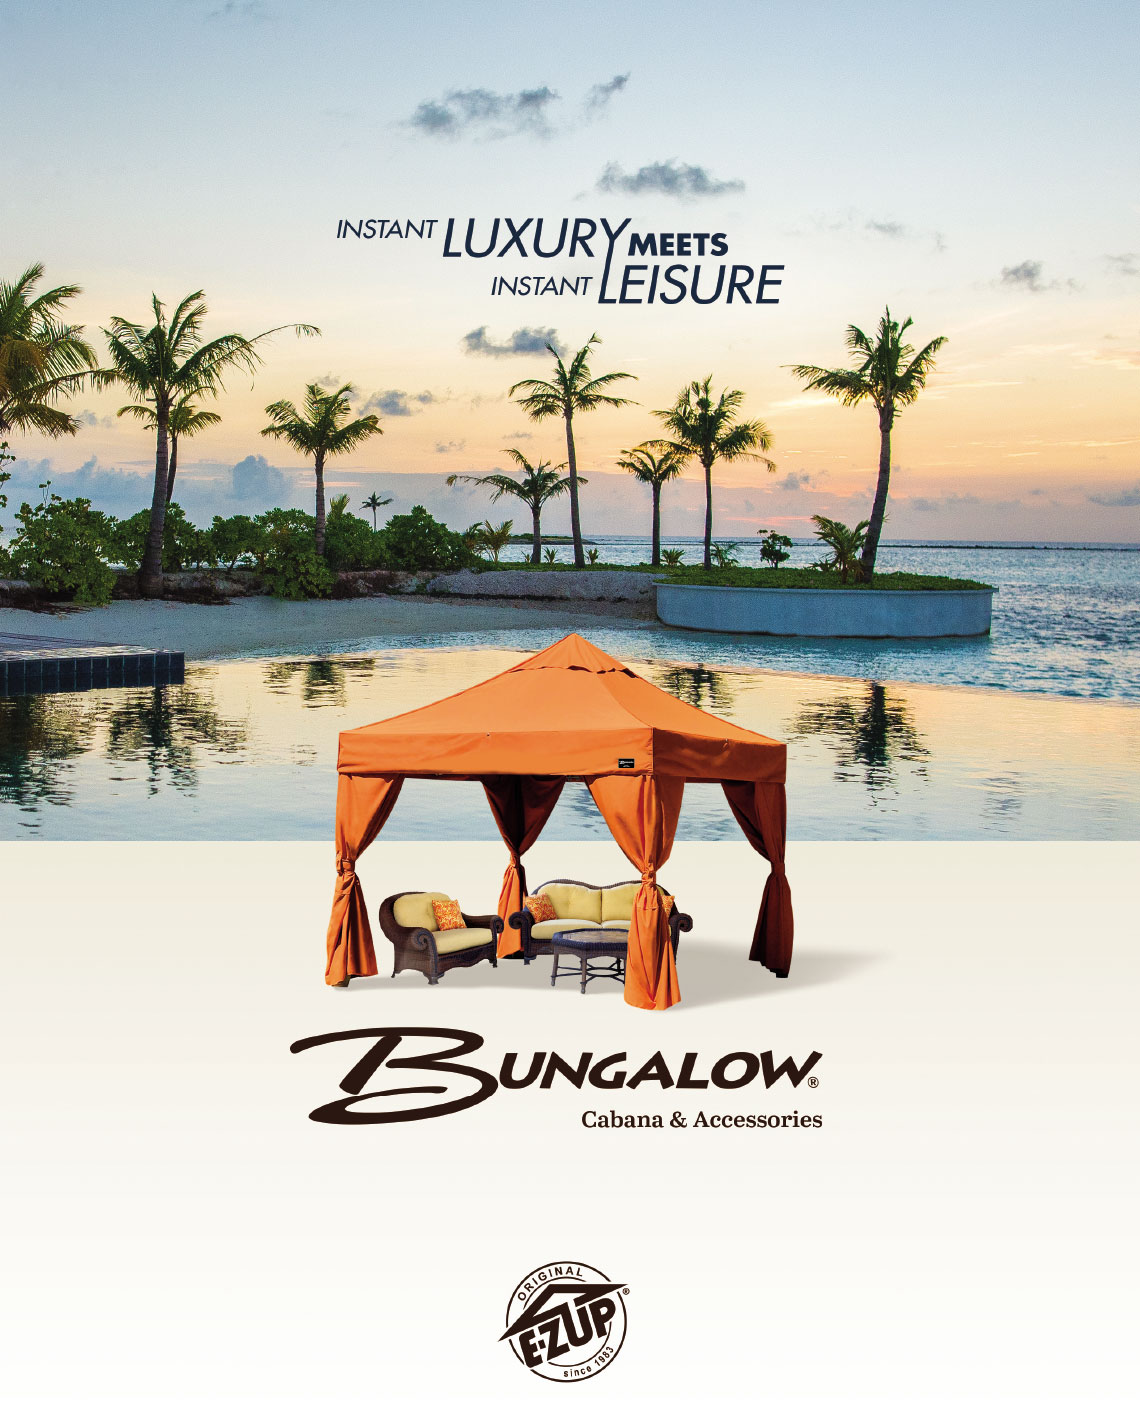 спецификации на луксозна шатра Bungalow® Cabana - страница 1